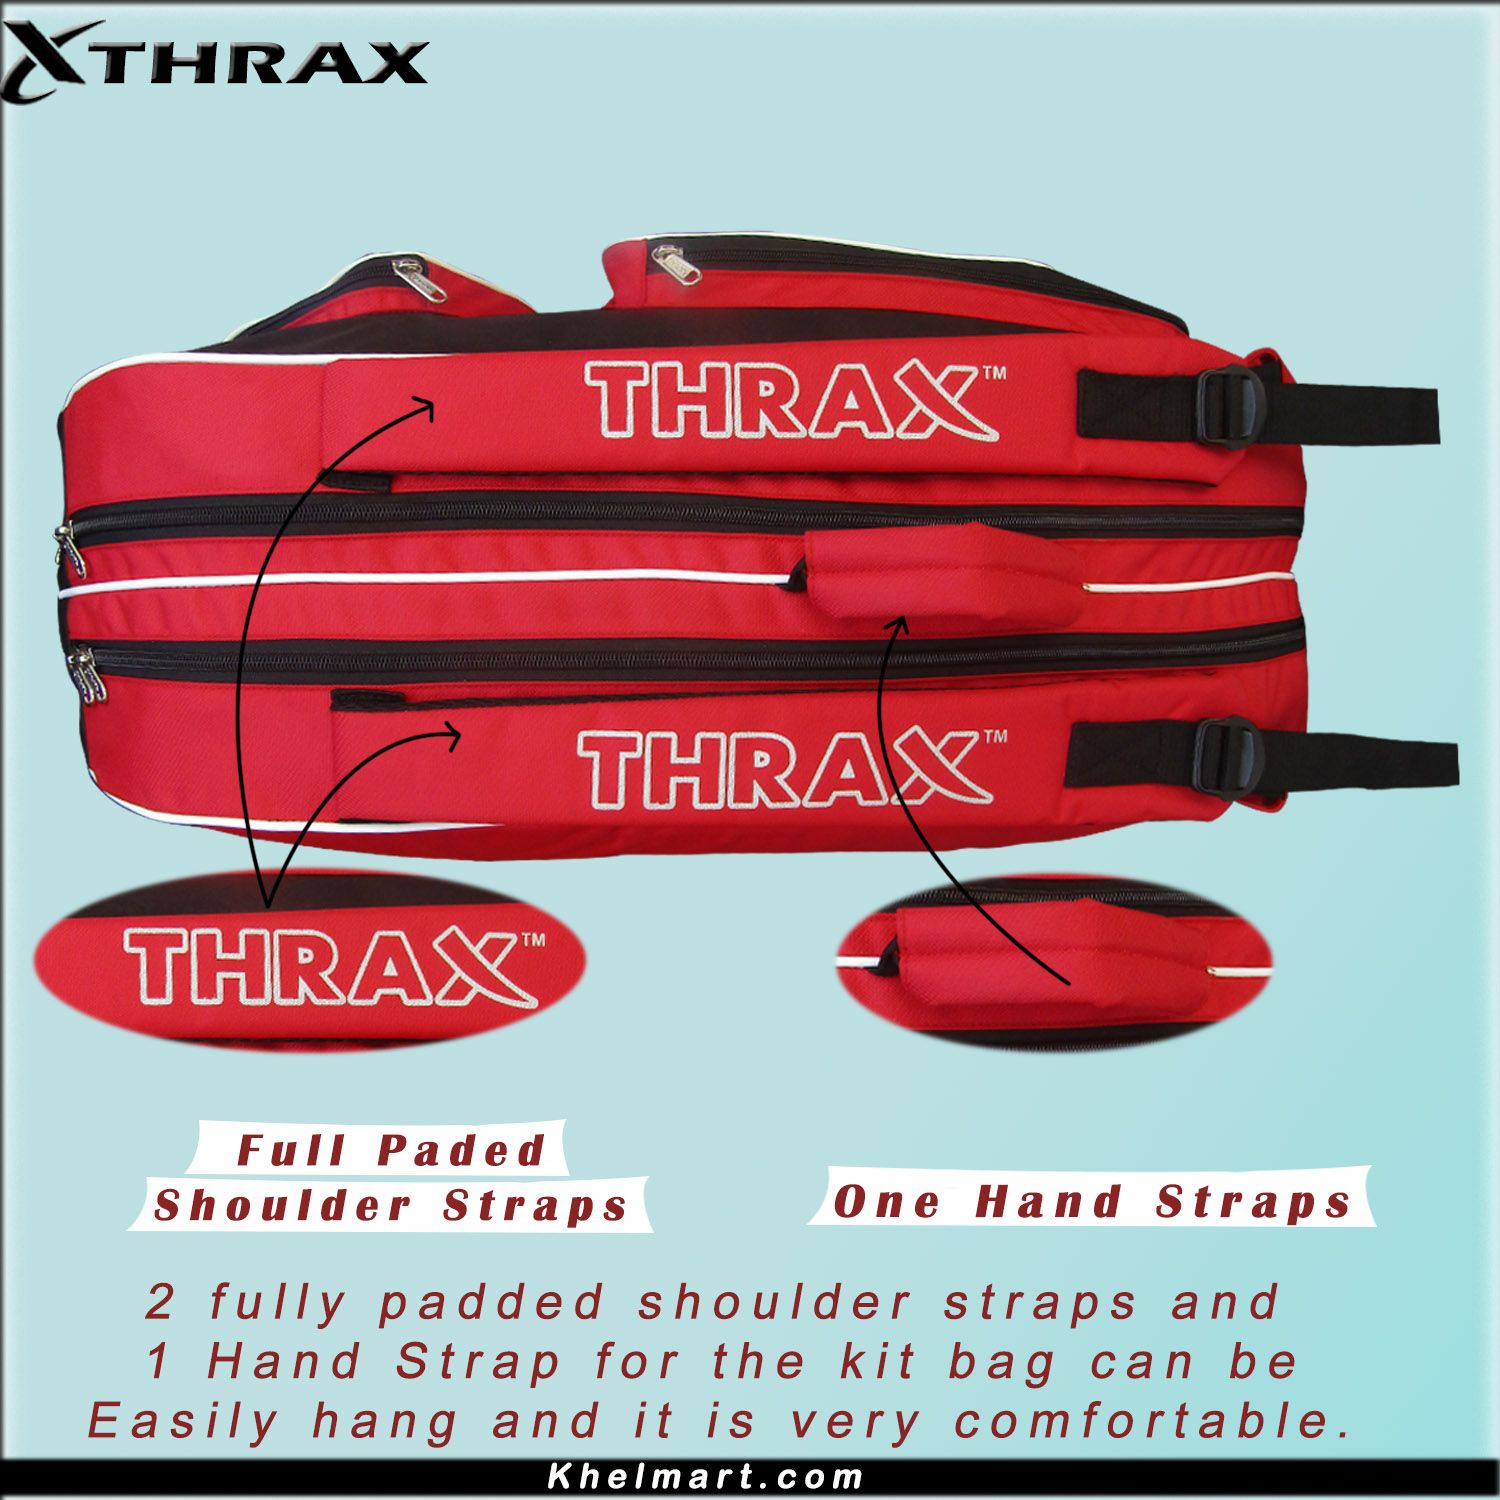  Thrax M Aello Series Badminton Kitbag Red Black